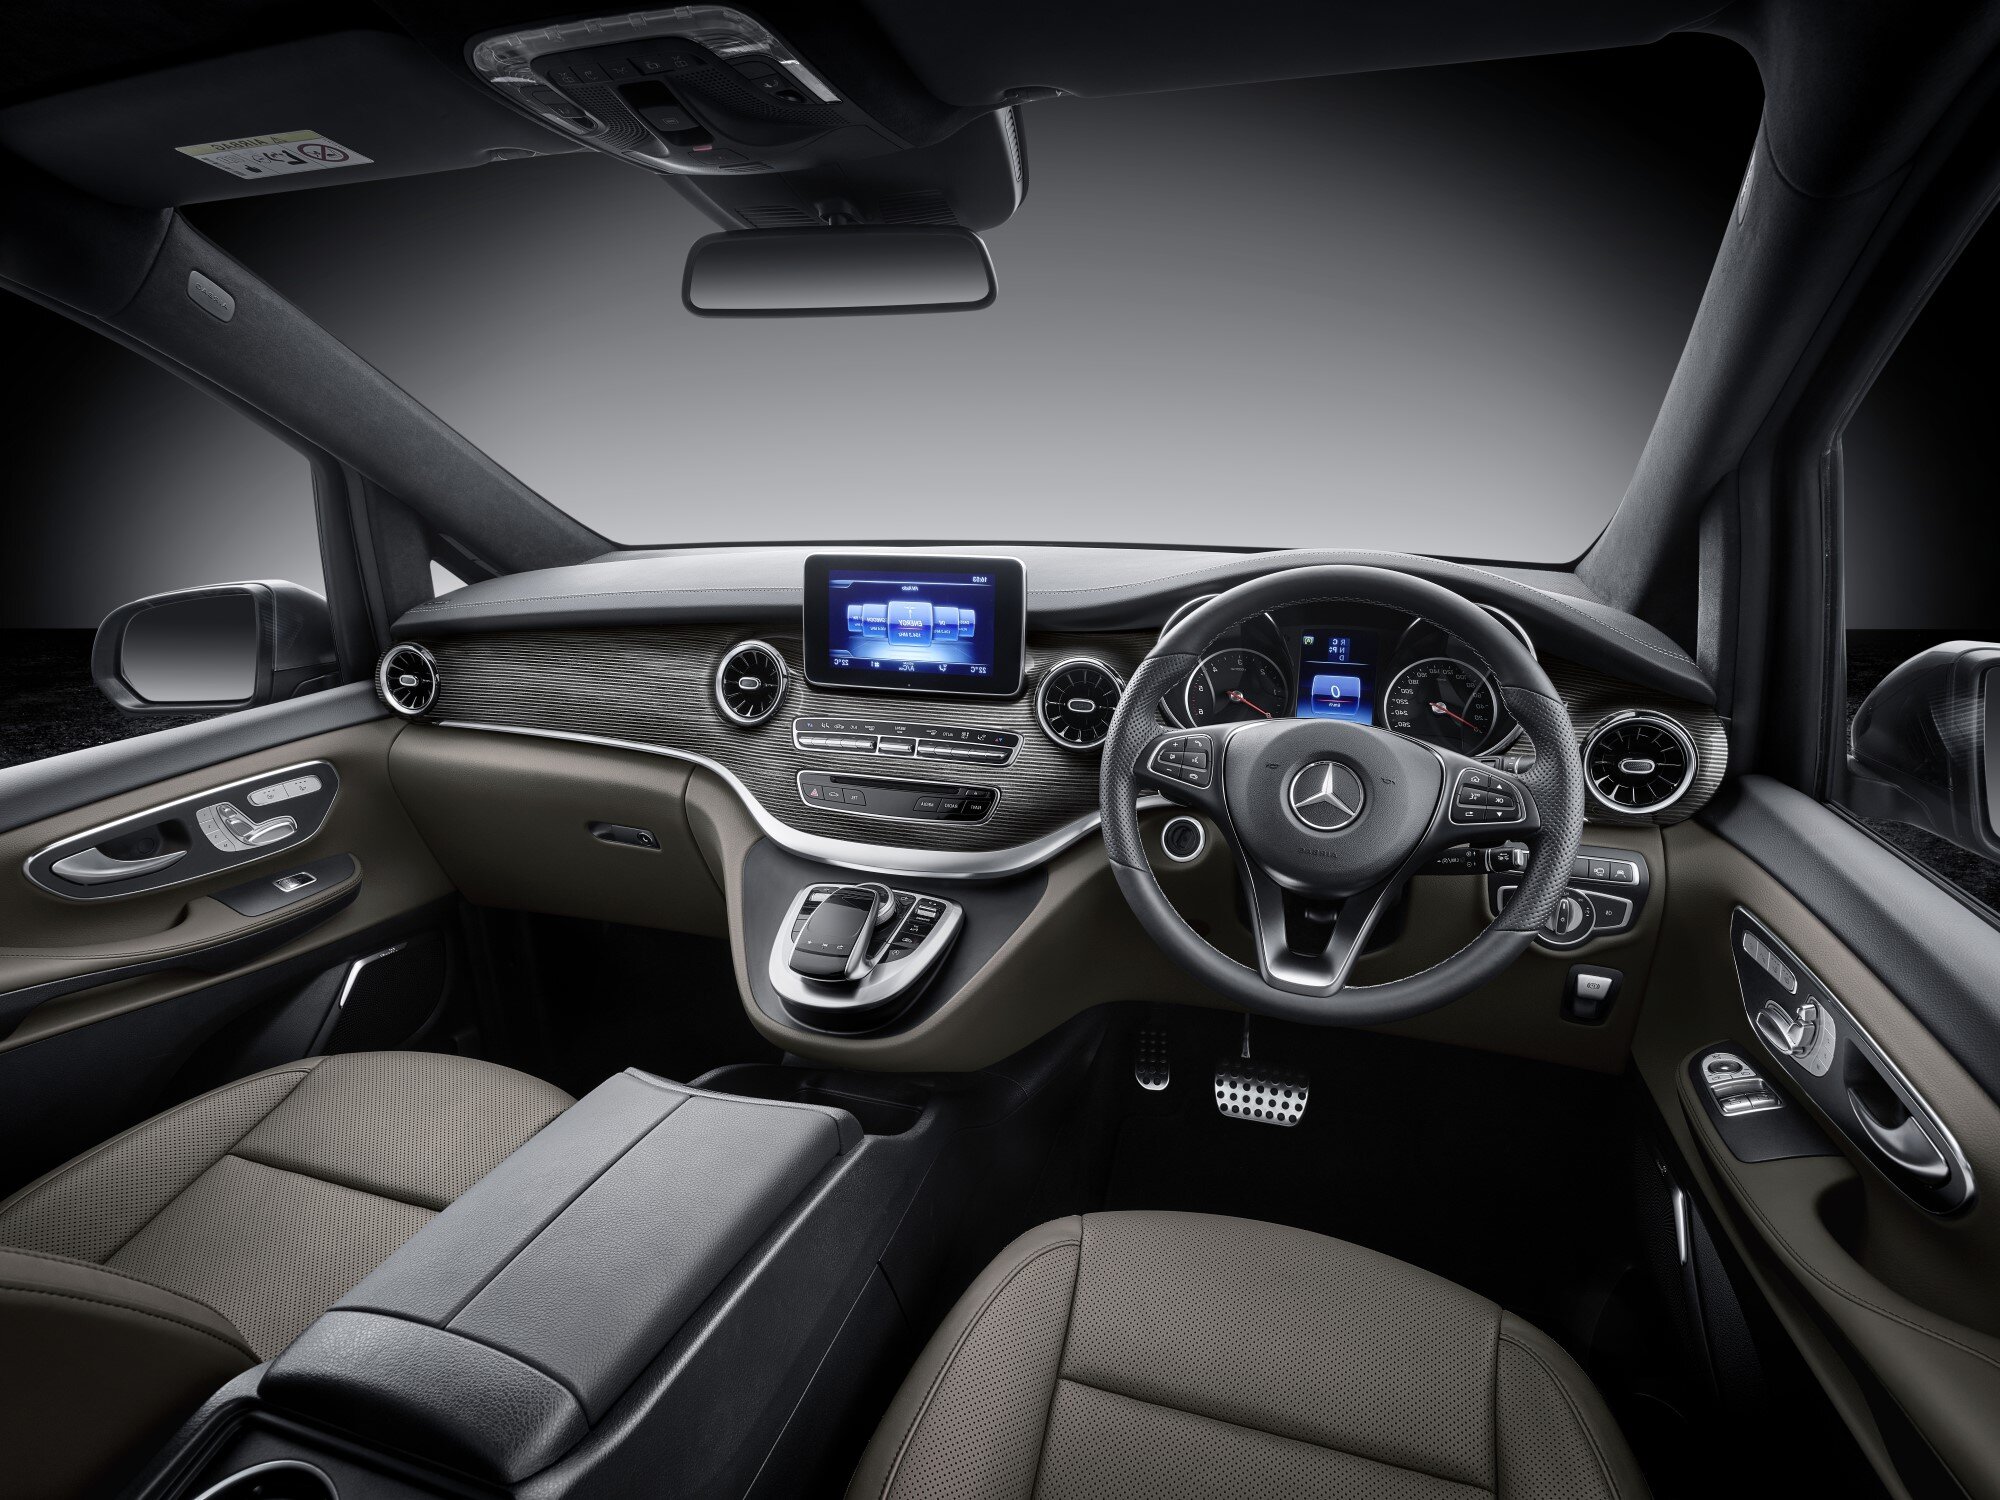 v-class-luxury-mpv-interior.jpg